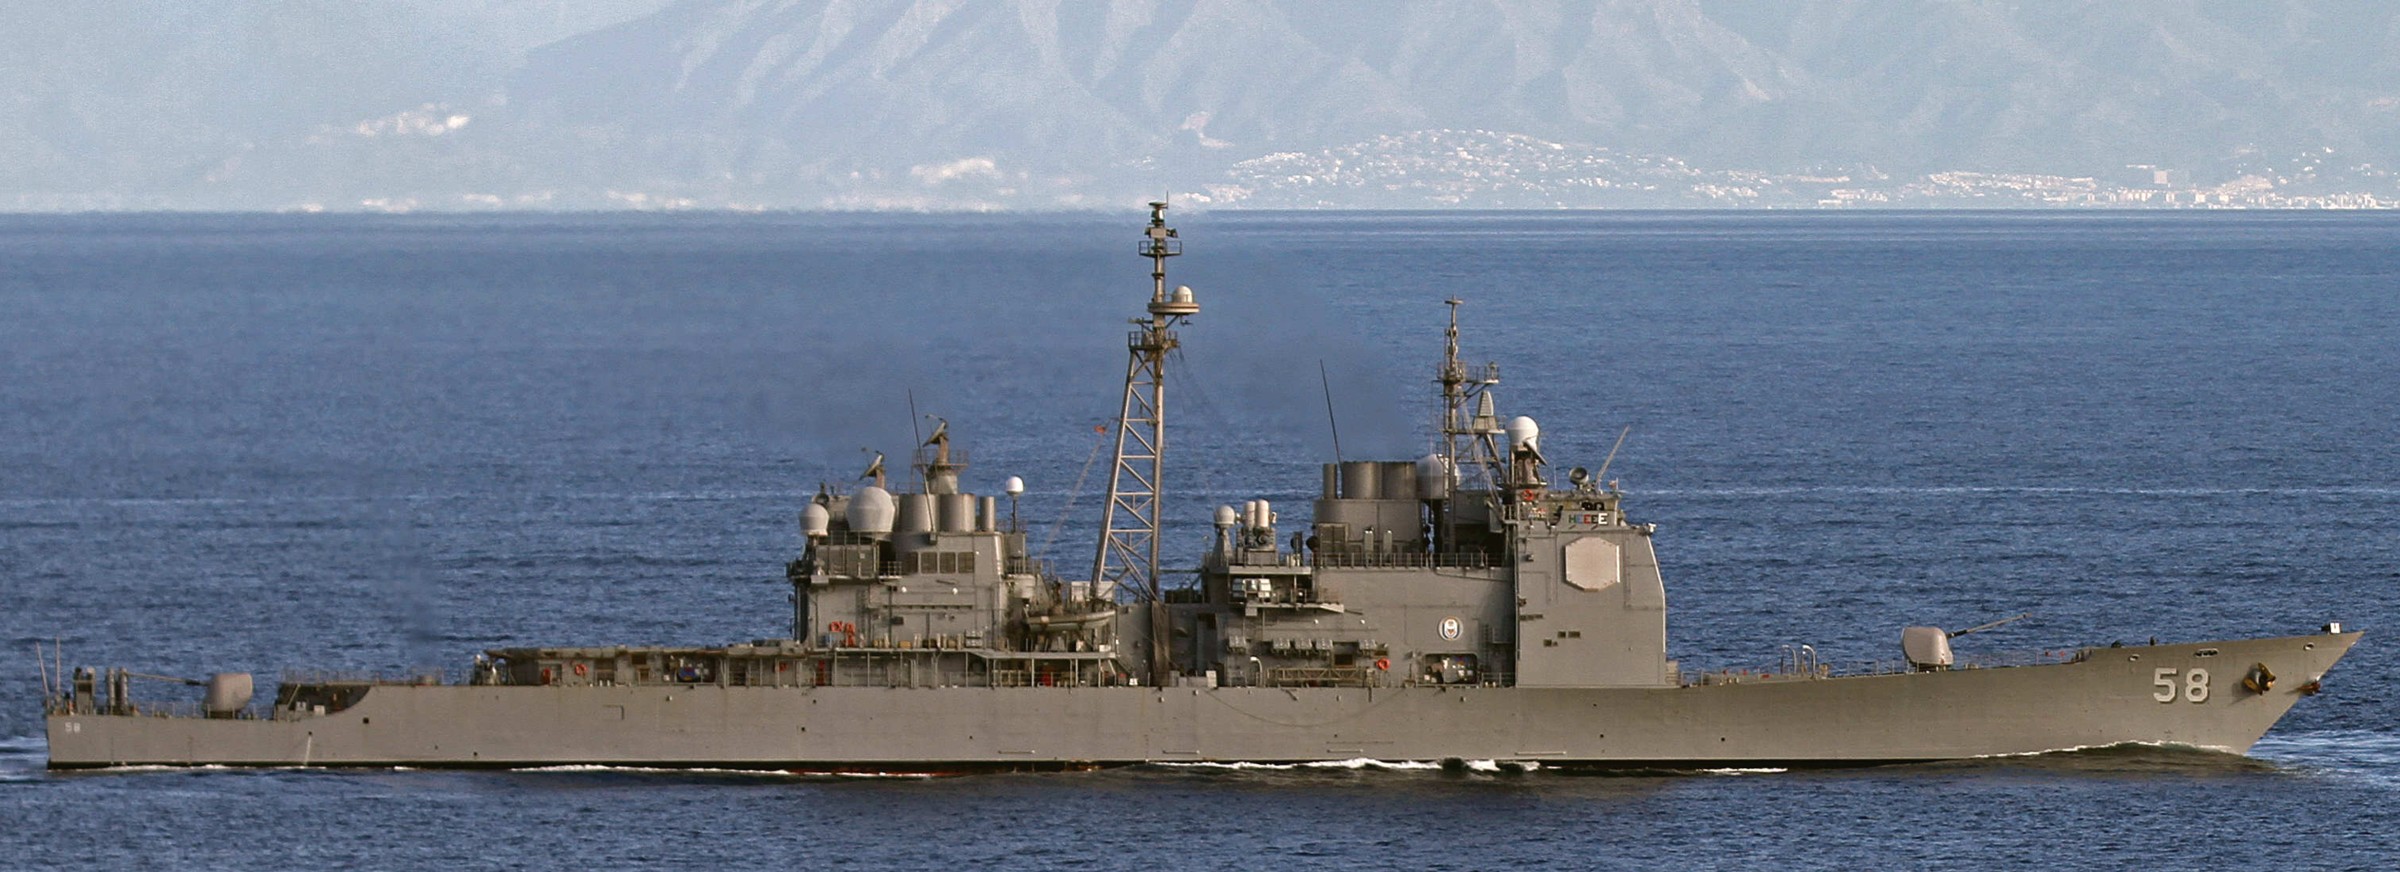 cg-58 uss philippine sea ticonderoga class guided missile cruiser aegis us navy gibraltar 39